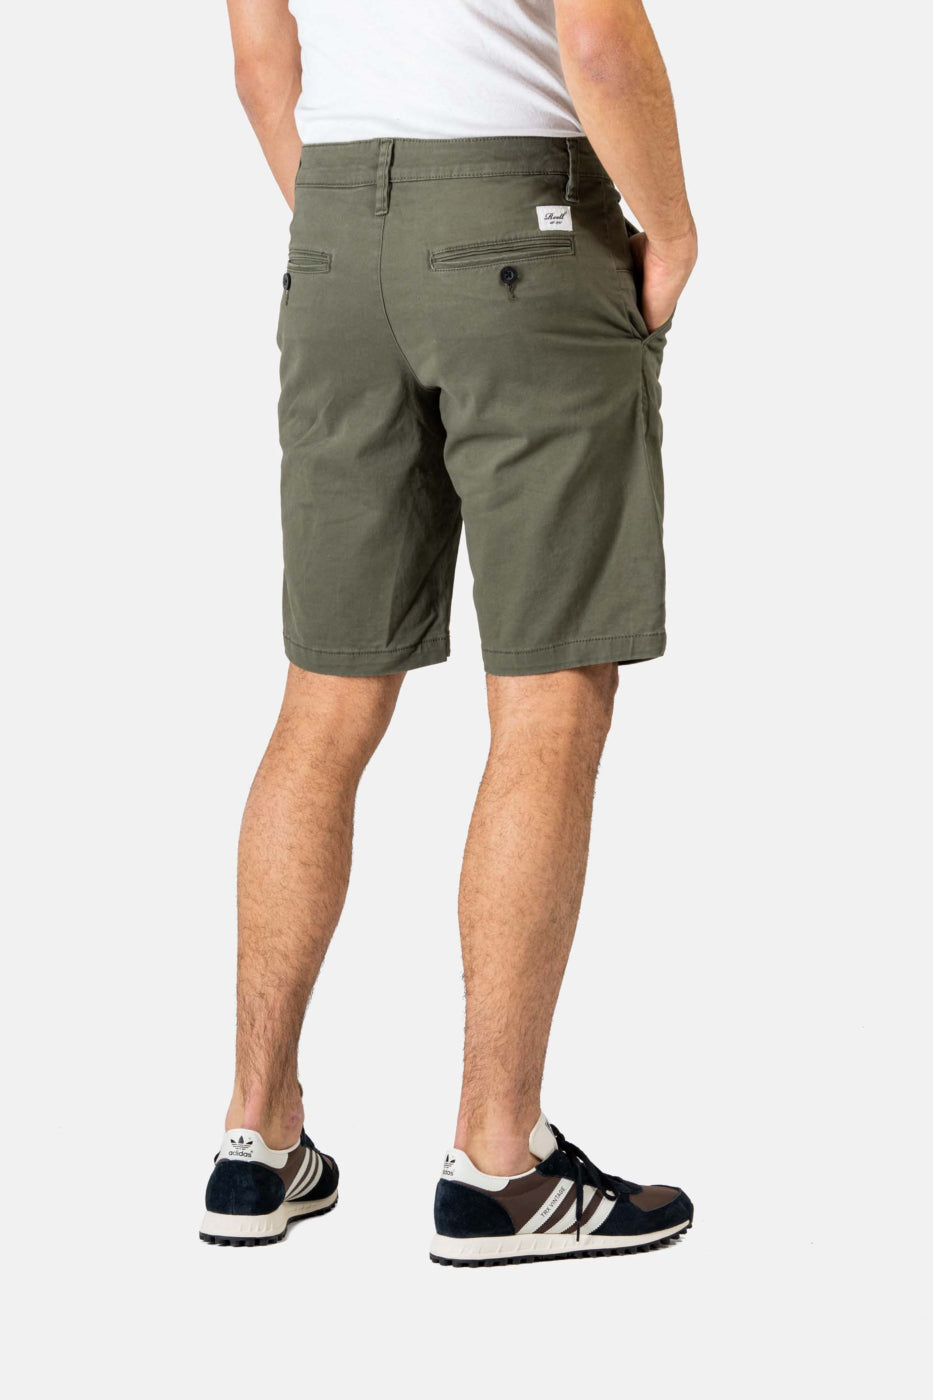 Flex Grip Chino Shorts, olive